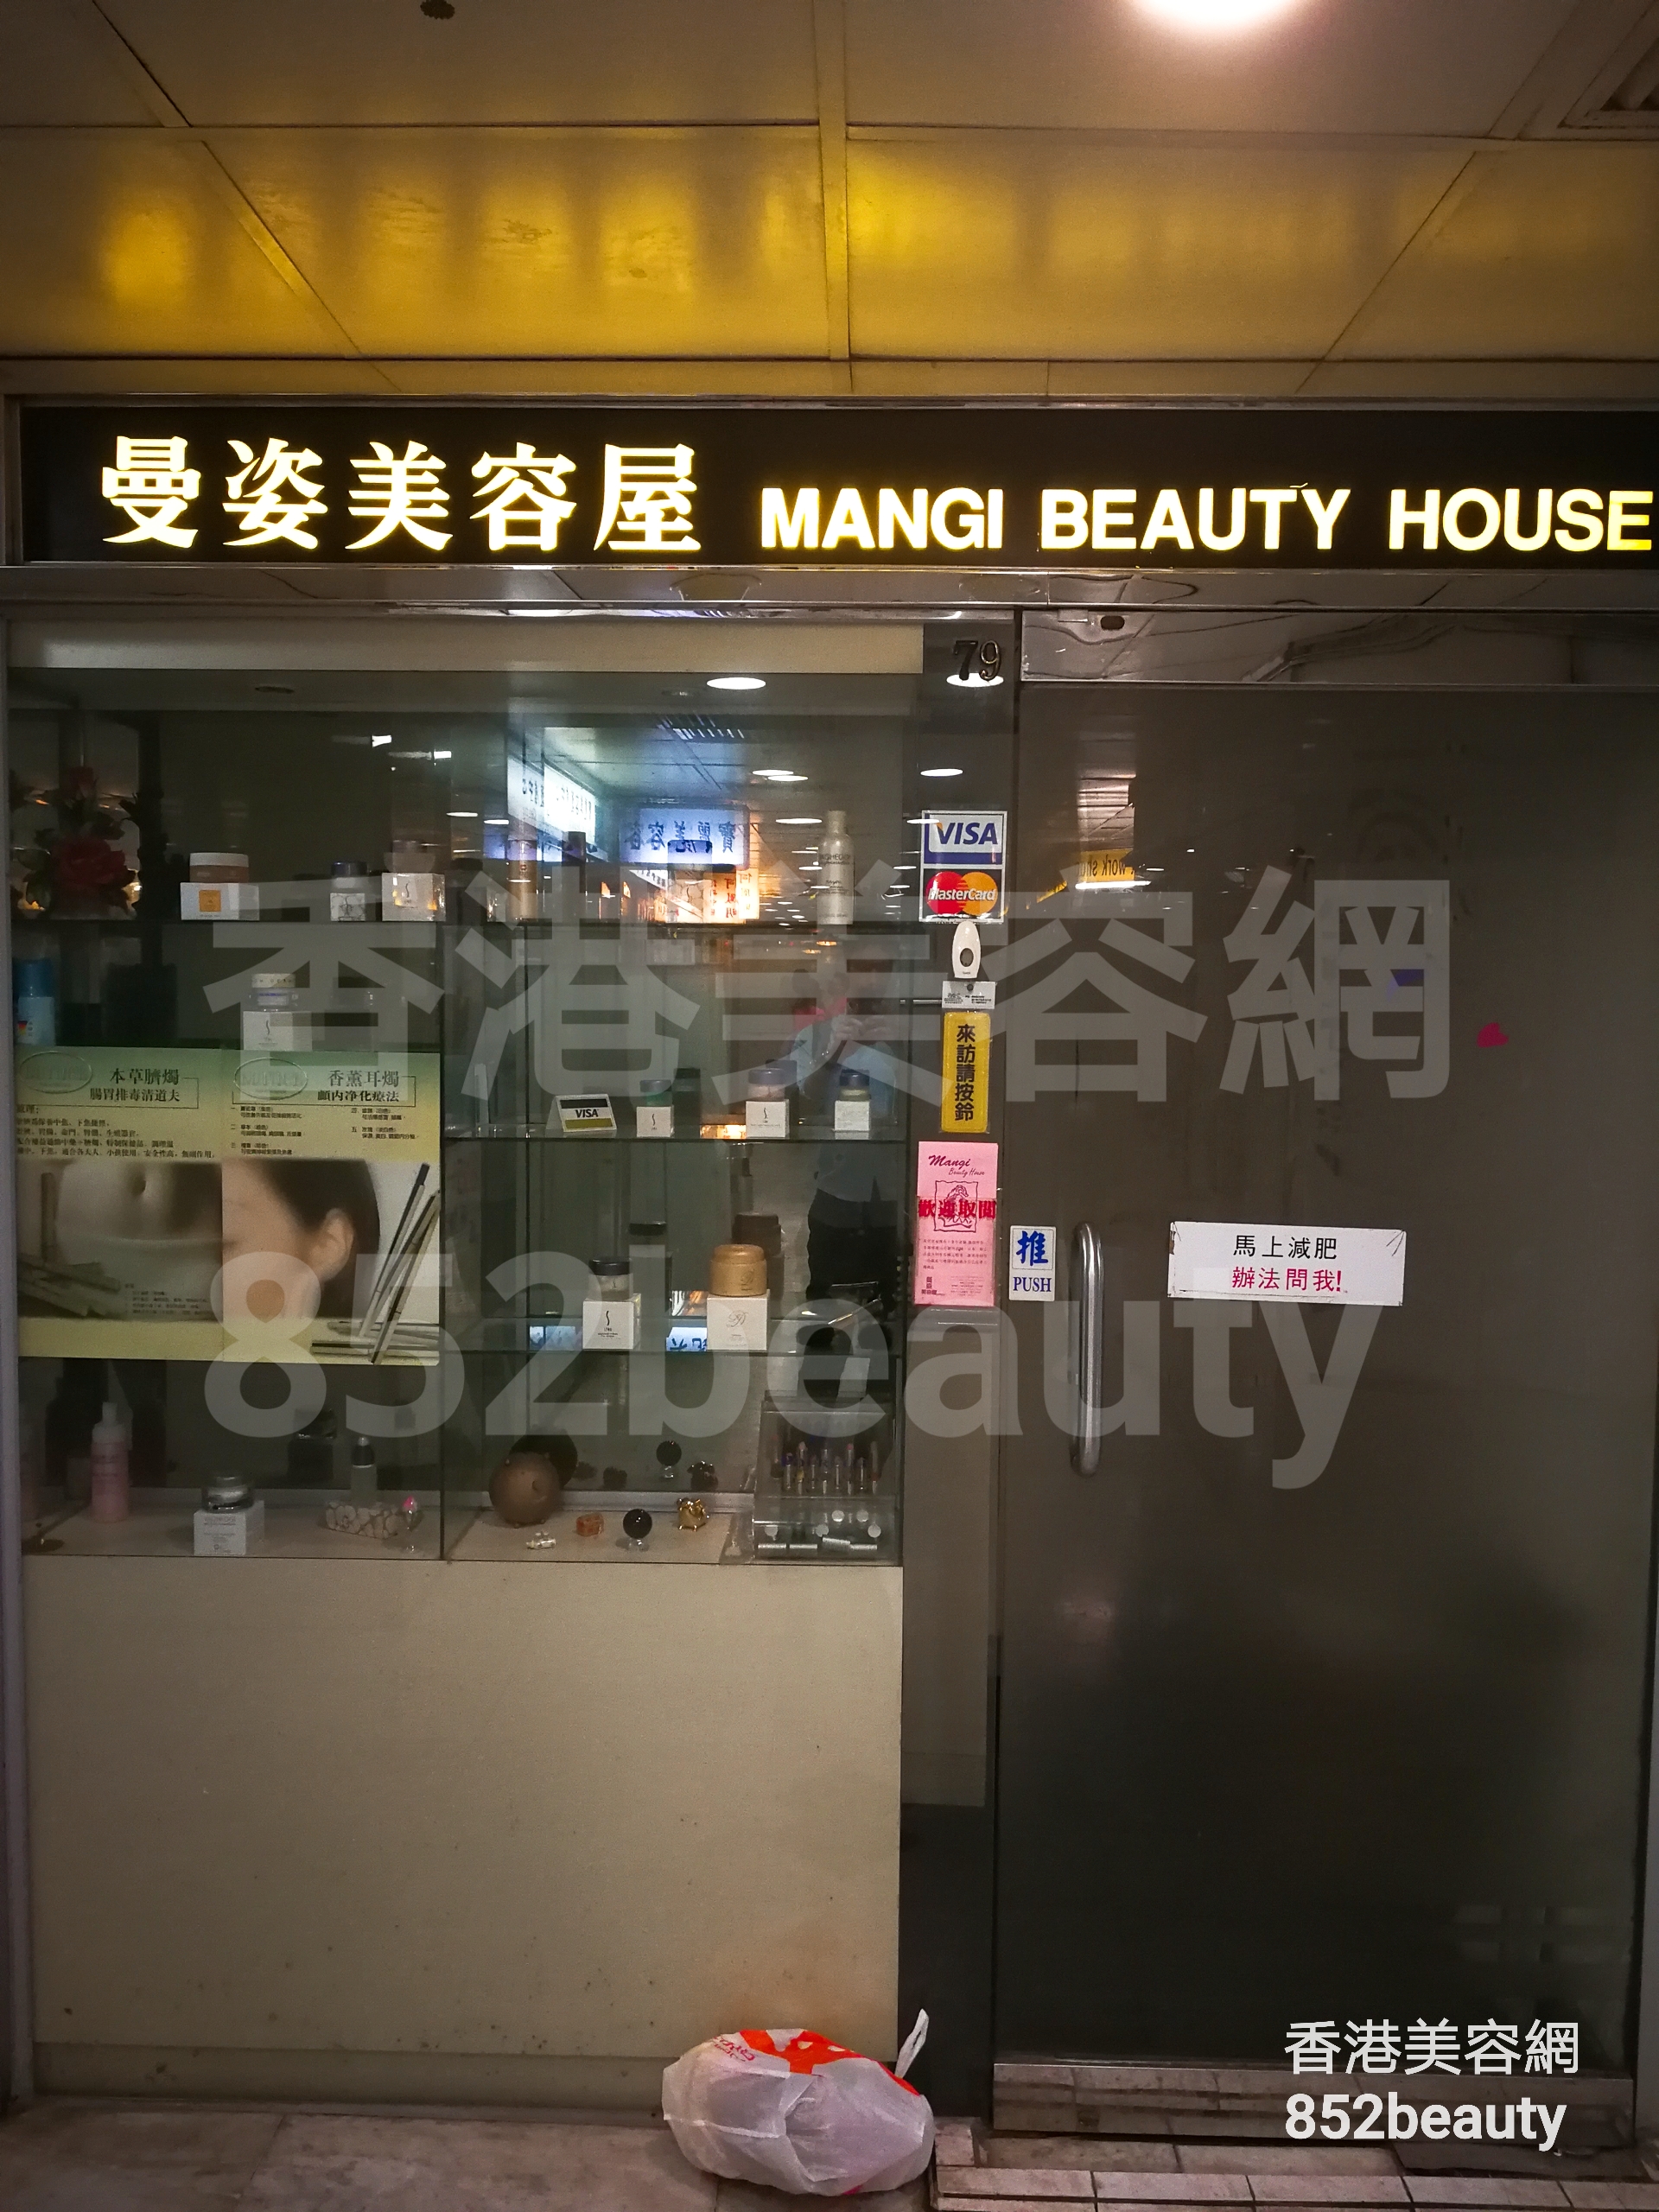 脱毛: Mangi Beauty House